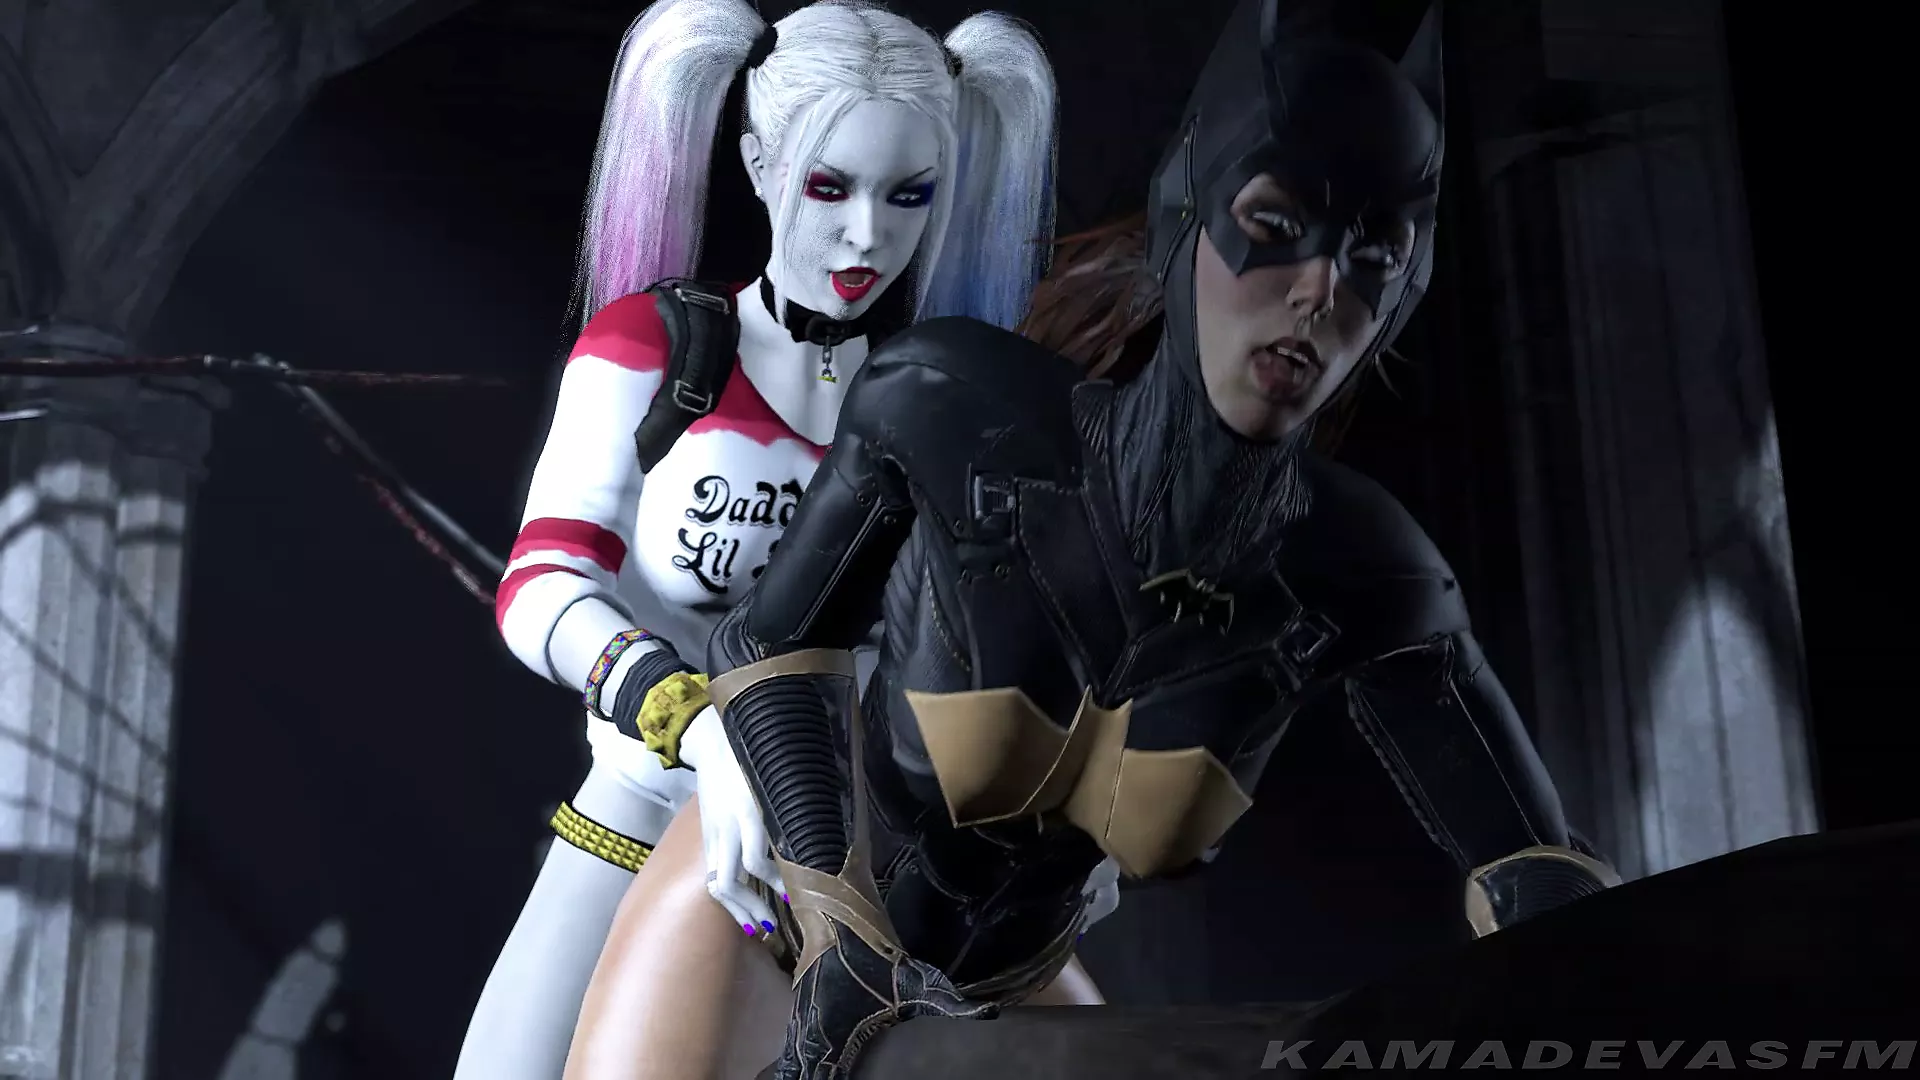 Harley Quinn Batman Porn Asylum - Episode 3 watch online or download